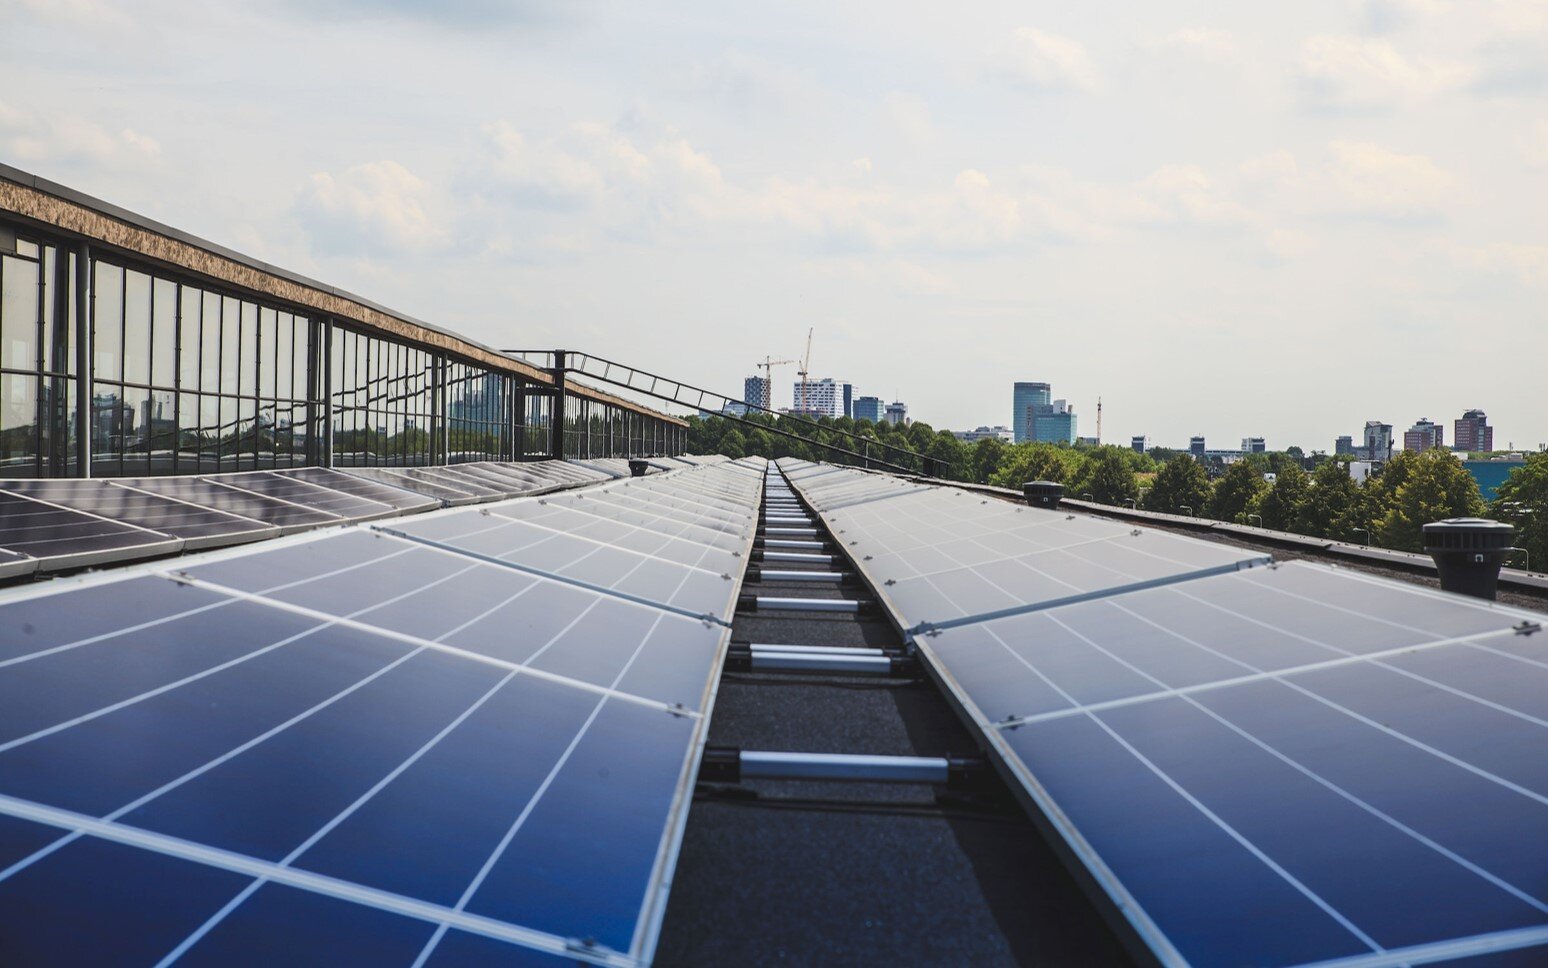 Solar panels on the Werkspoorfabriek in Utrecht